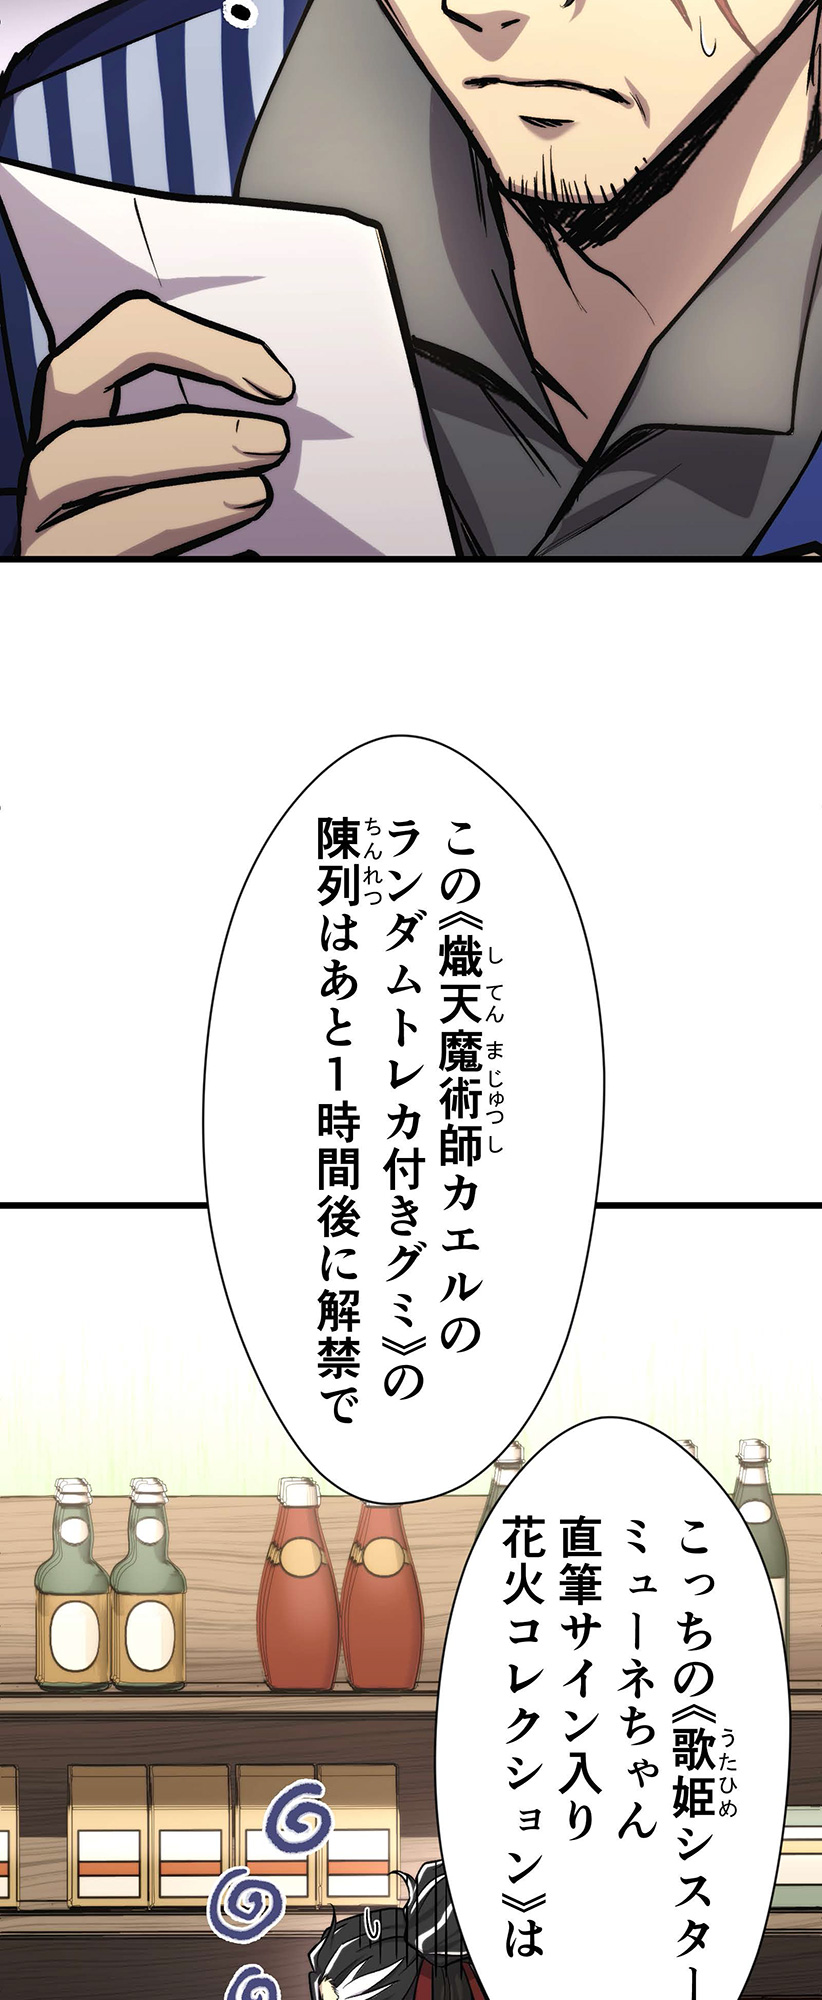 Isekai Konbini no Ossan, Jitsu wa Saikyou. - Chapter 1 - Page 52